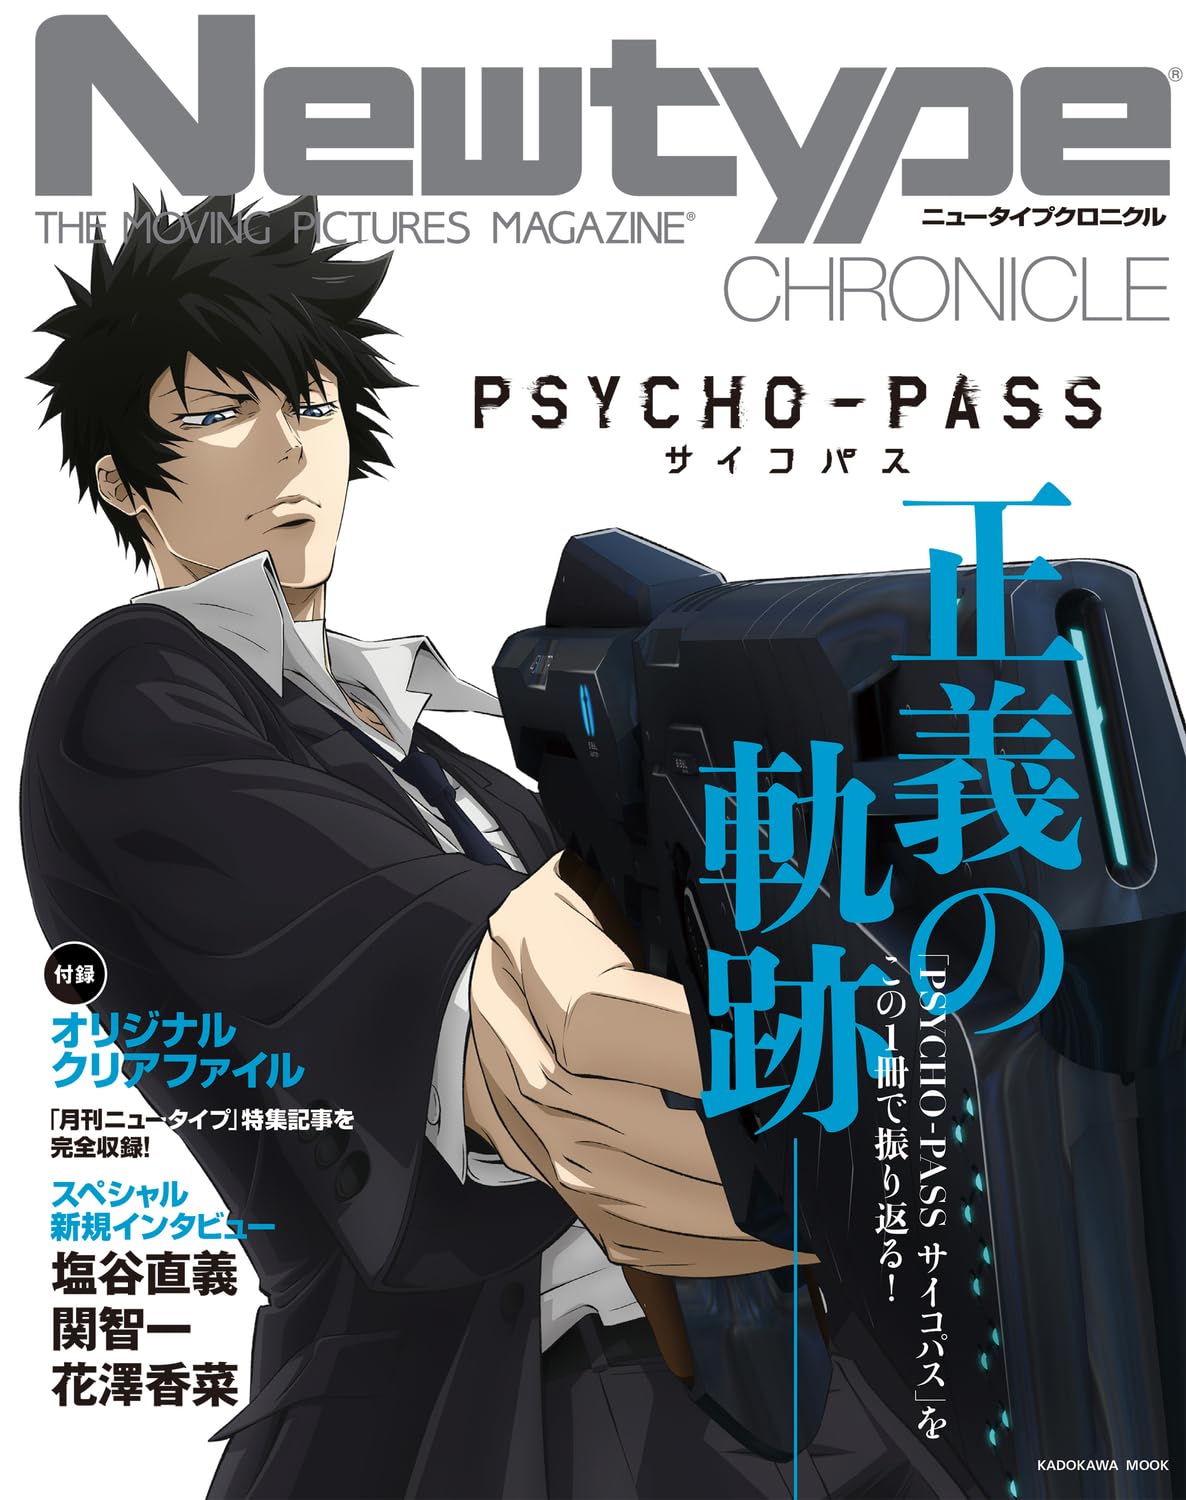 Shingeki no Kyojin: Chronicle - Animes BR